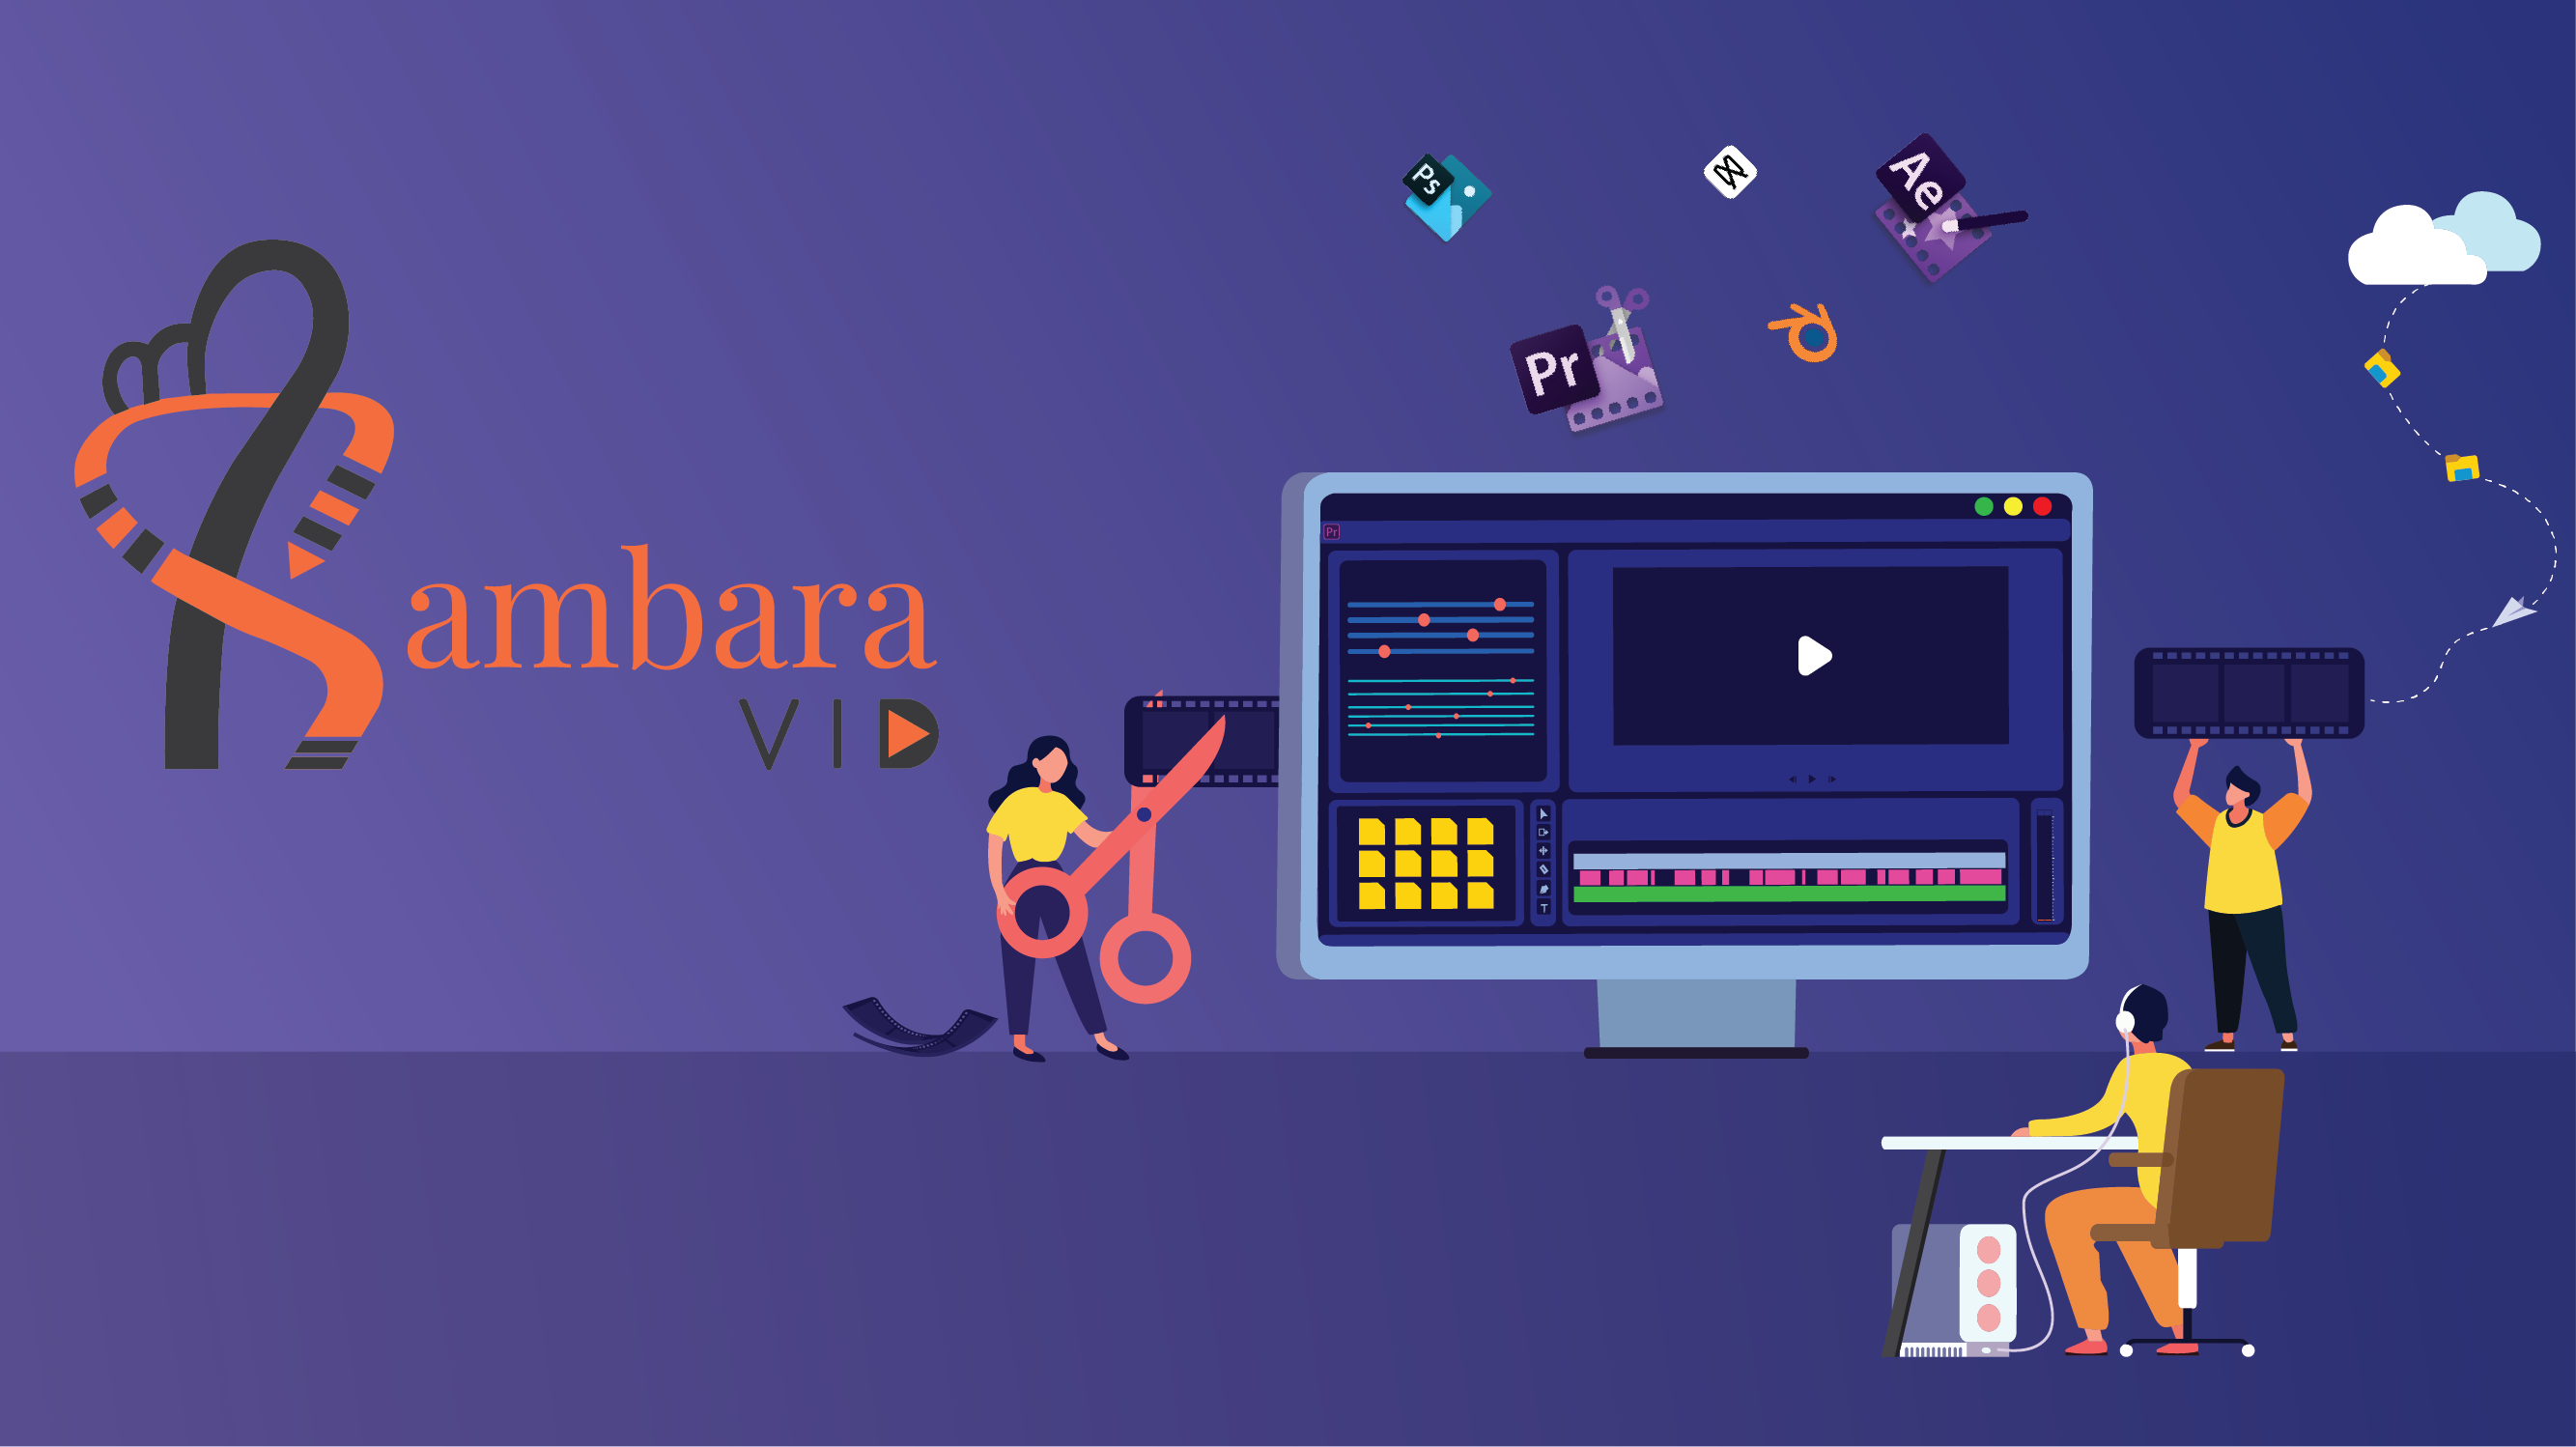 Sambaravid - video editing and 2d animation services